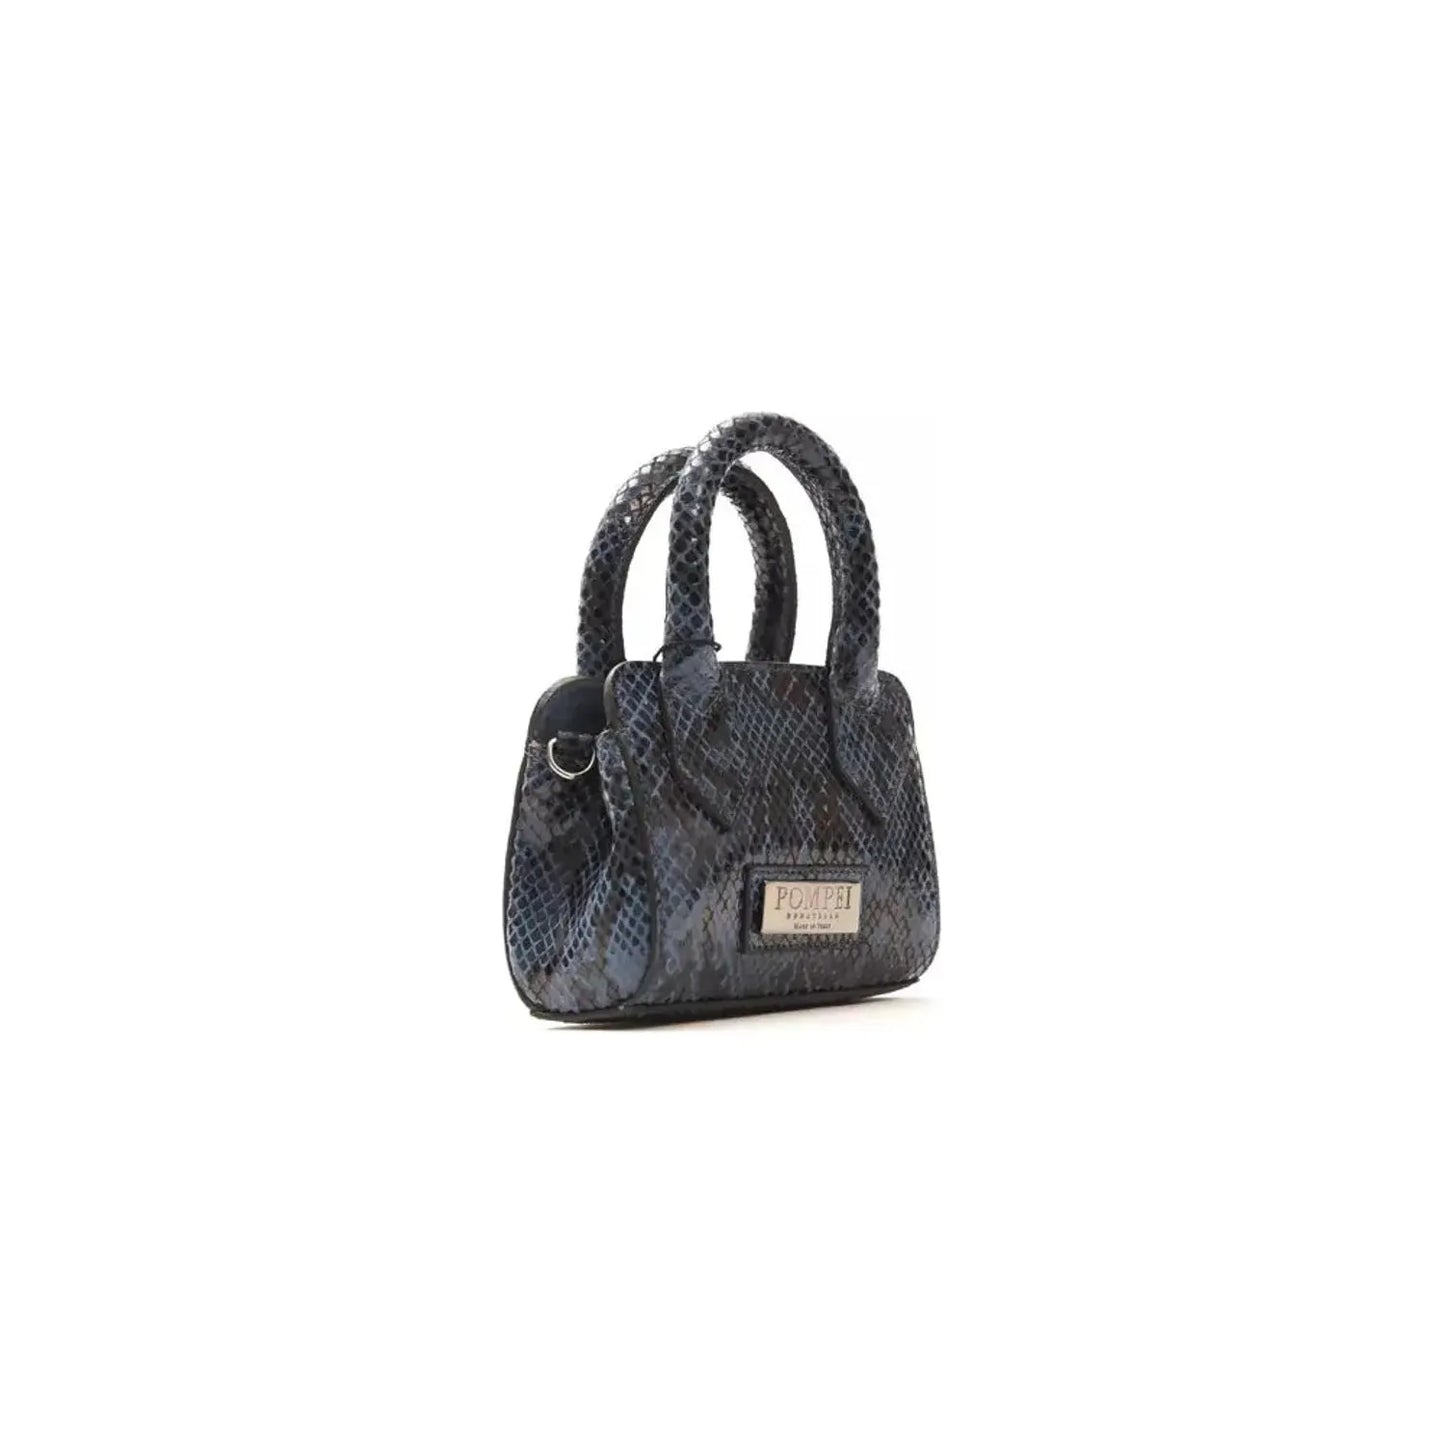 Pompei Donatella Chic Python Print Mini Tote Elegance blu-navy-handbag-1 Handbags, Wallets & Cases stock_product_image_5784_687302743-25-bcd3d111-db2.webp